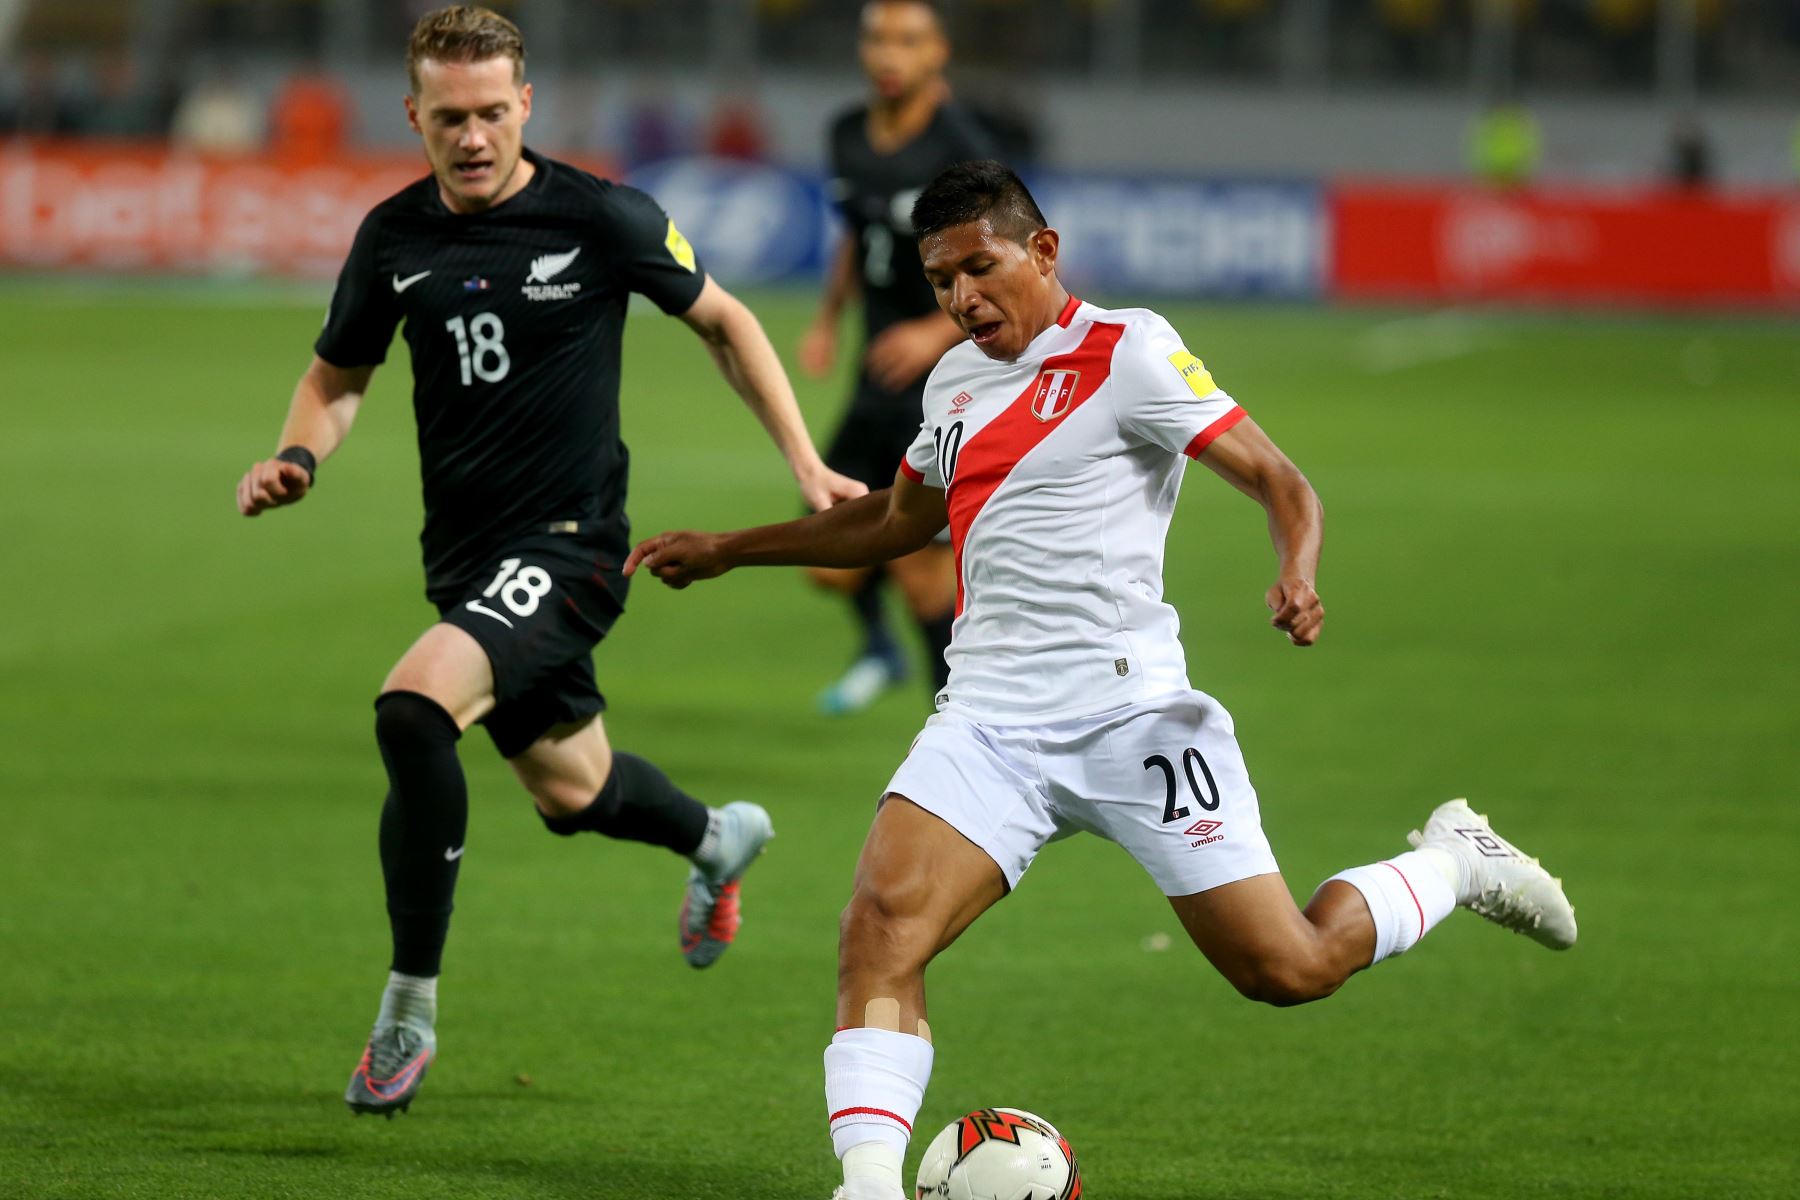 Peru Beats New Zealand 2 0 To Capture Last World Cup Berth News Andina Peru News Agency